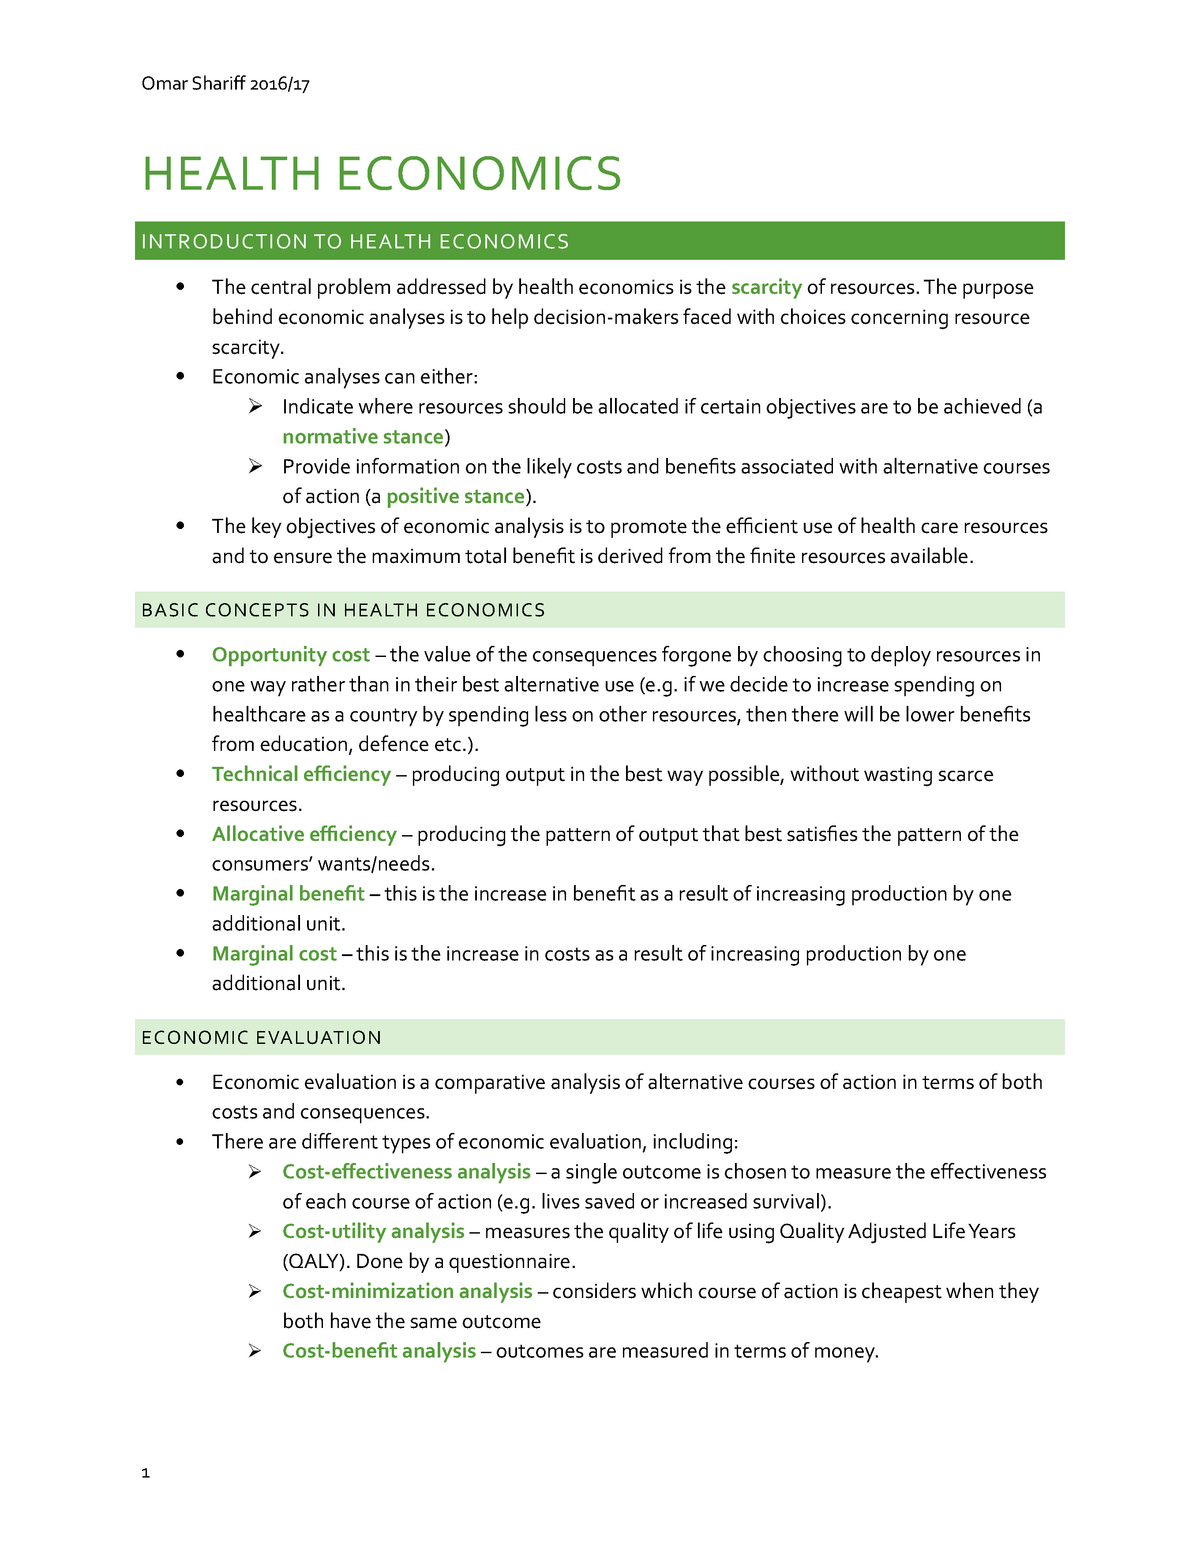 dissertation topics in health economics